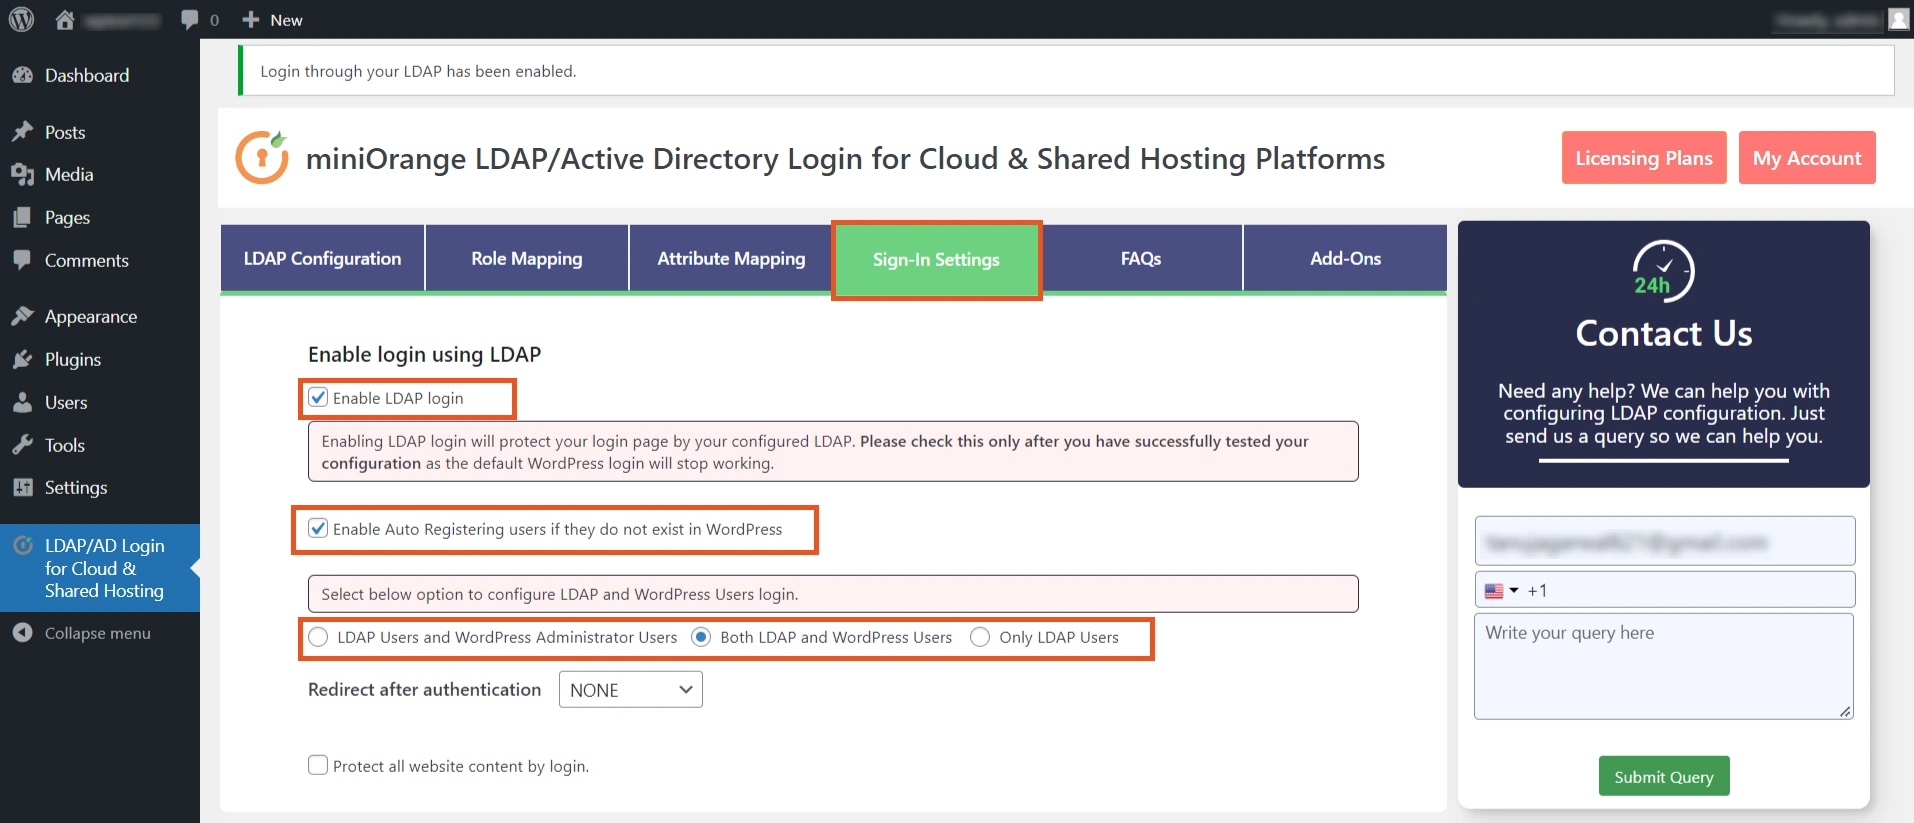 miniOrange LDAP Cloud active directory LDAP integration for shared hosting environment plugin sign in settings